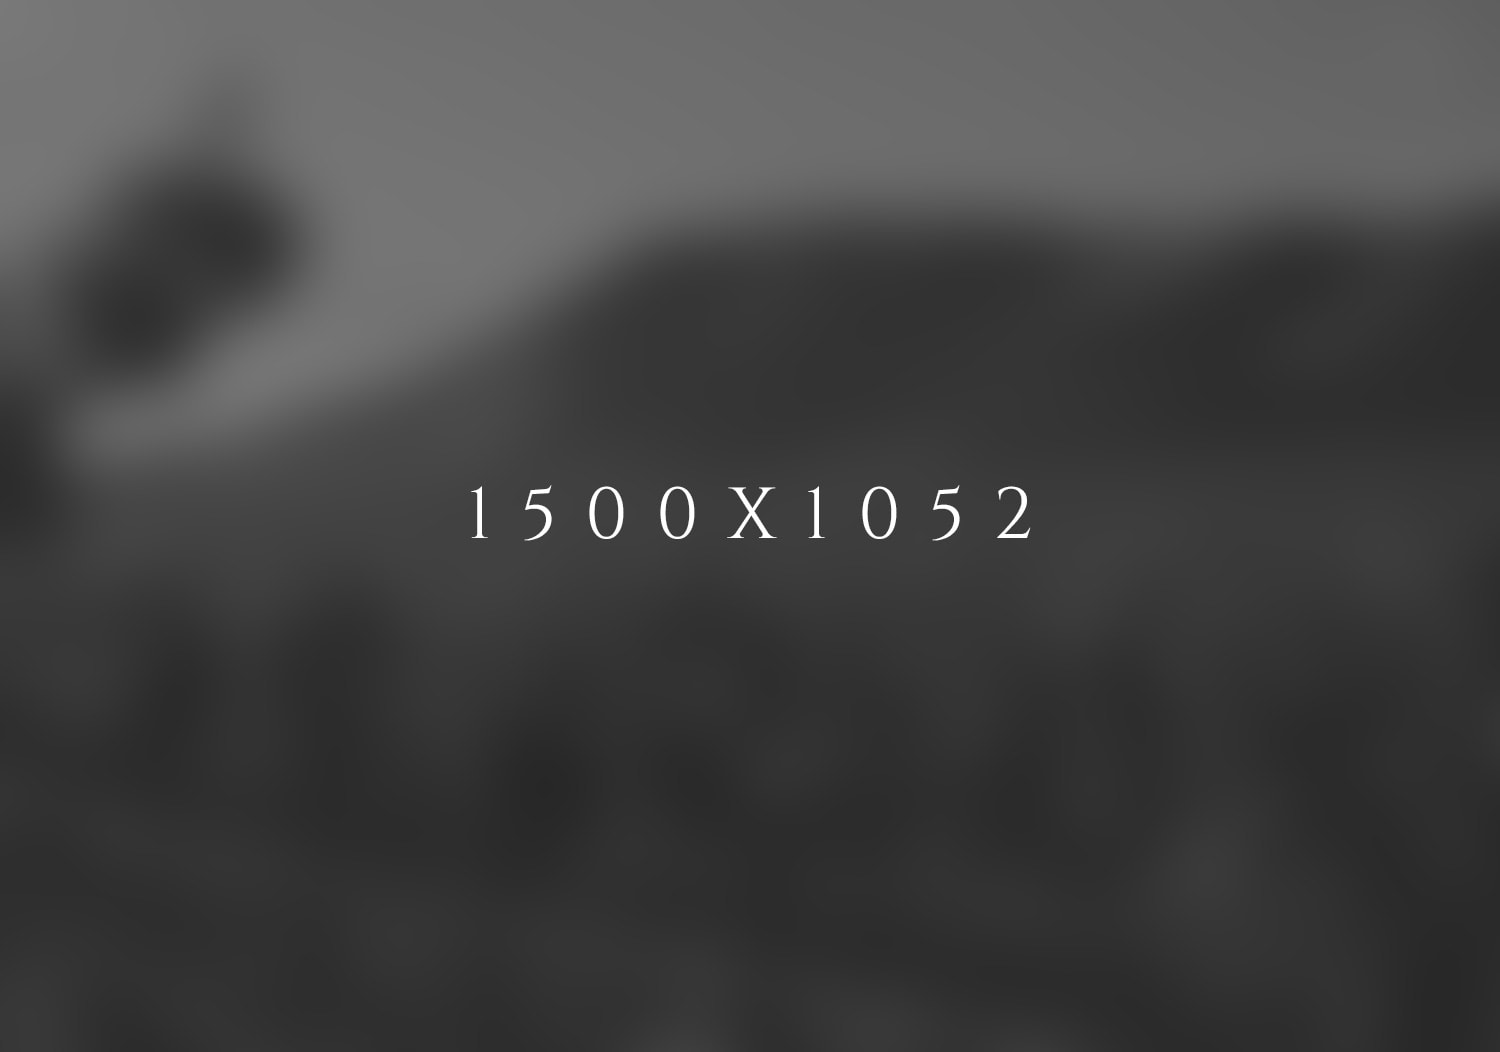 1500x1052-min - Copy (14).jpg